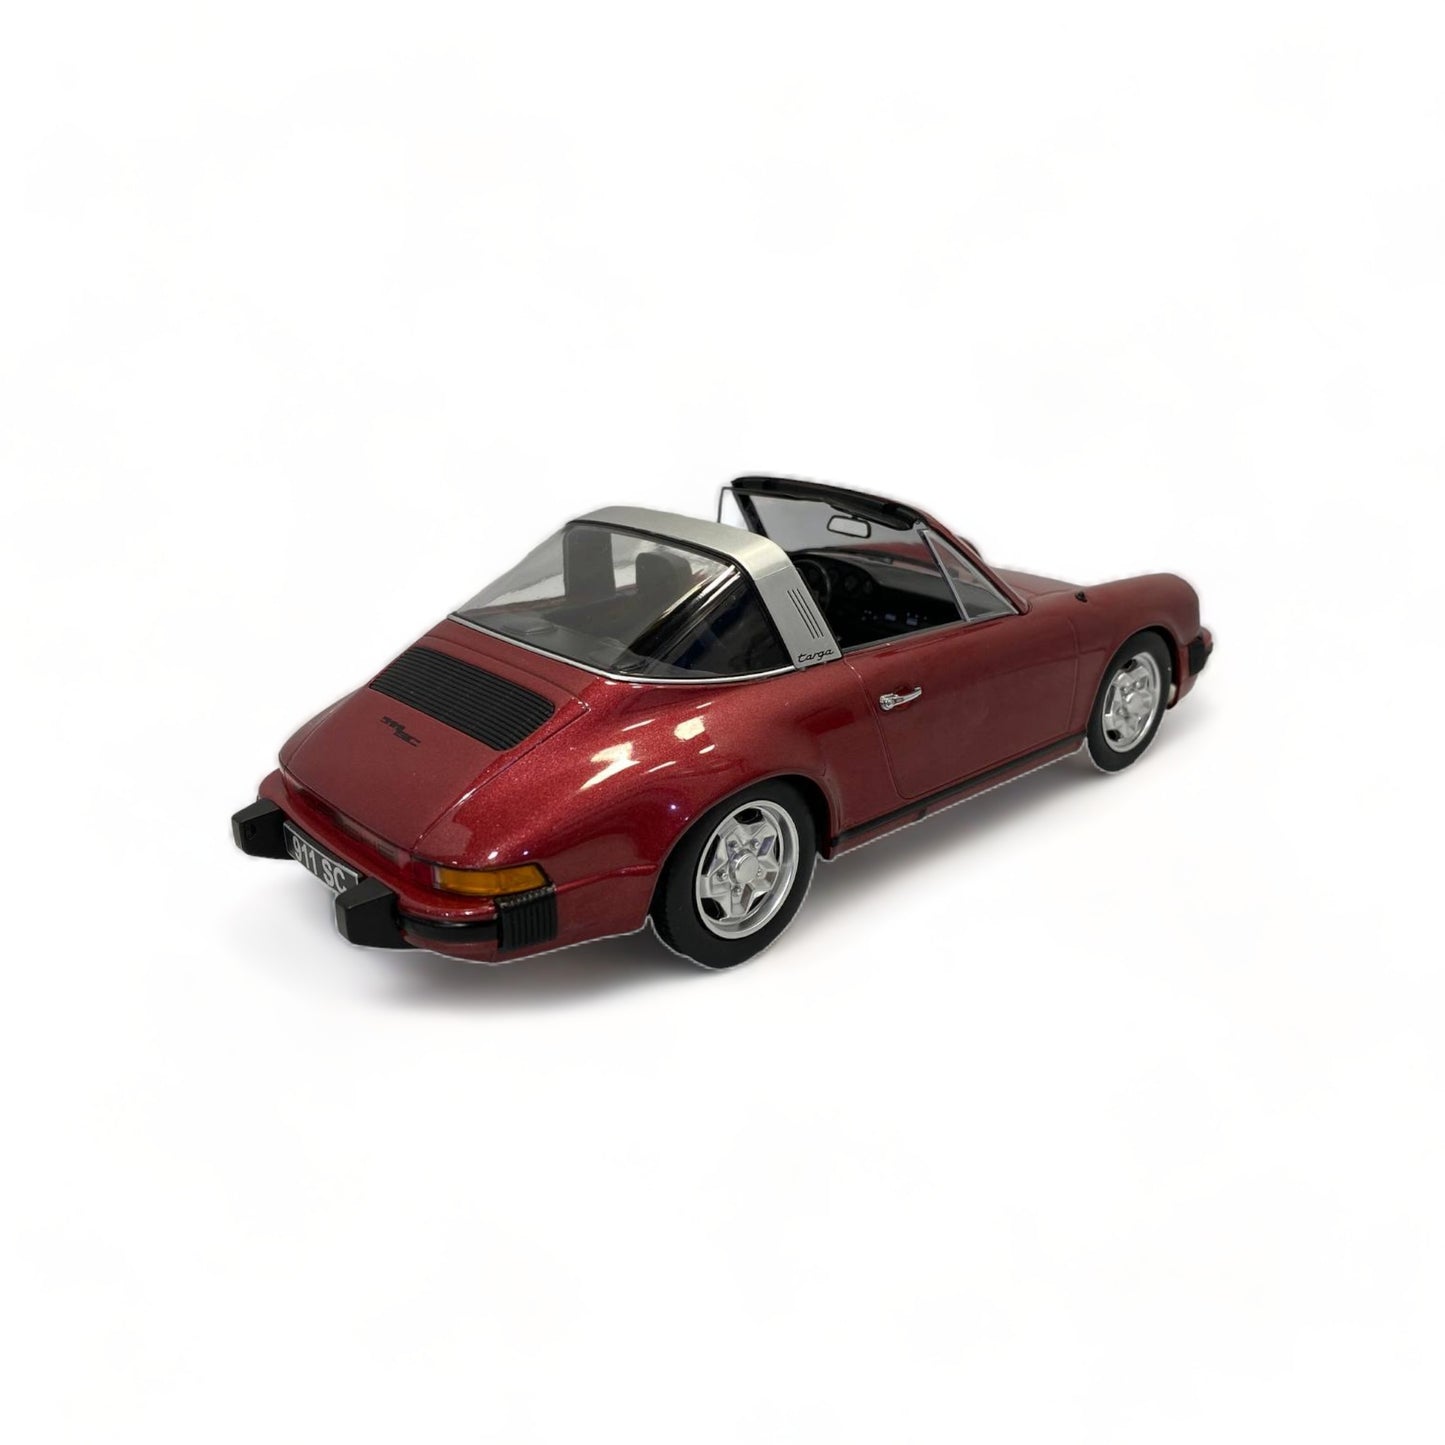 1/18 KK Scale Porsche 911 SC Targa (1978) - Metal Diecast, Non-Opening, Striking Red|Sold in Dturman.com Dubai UAE.